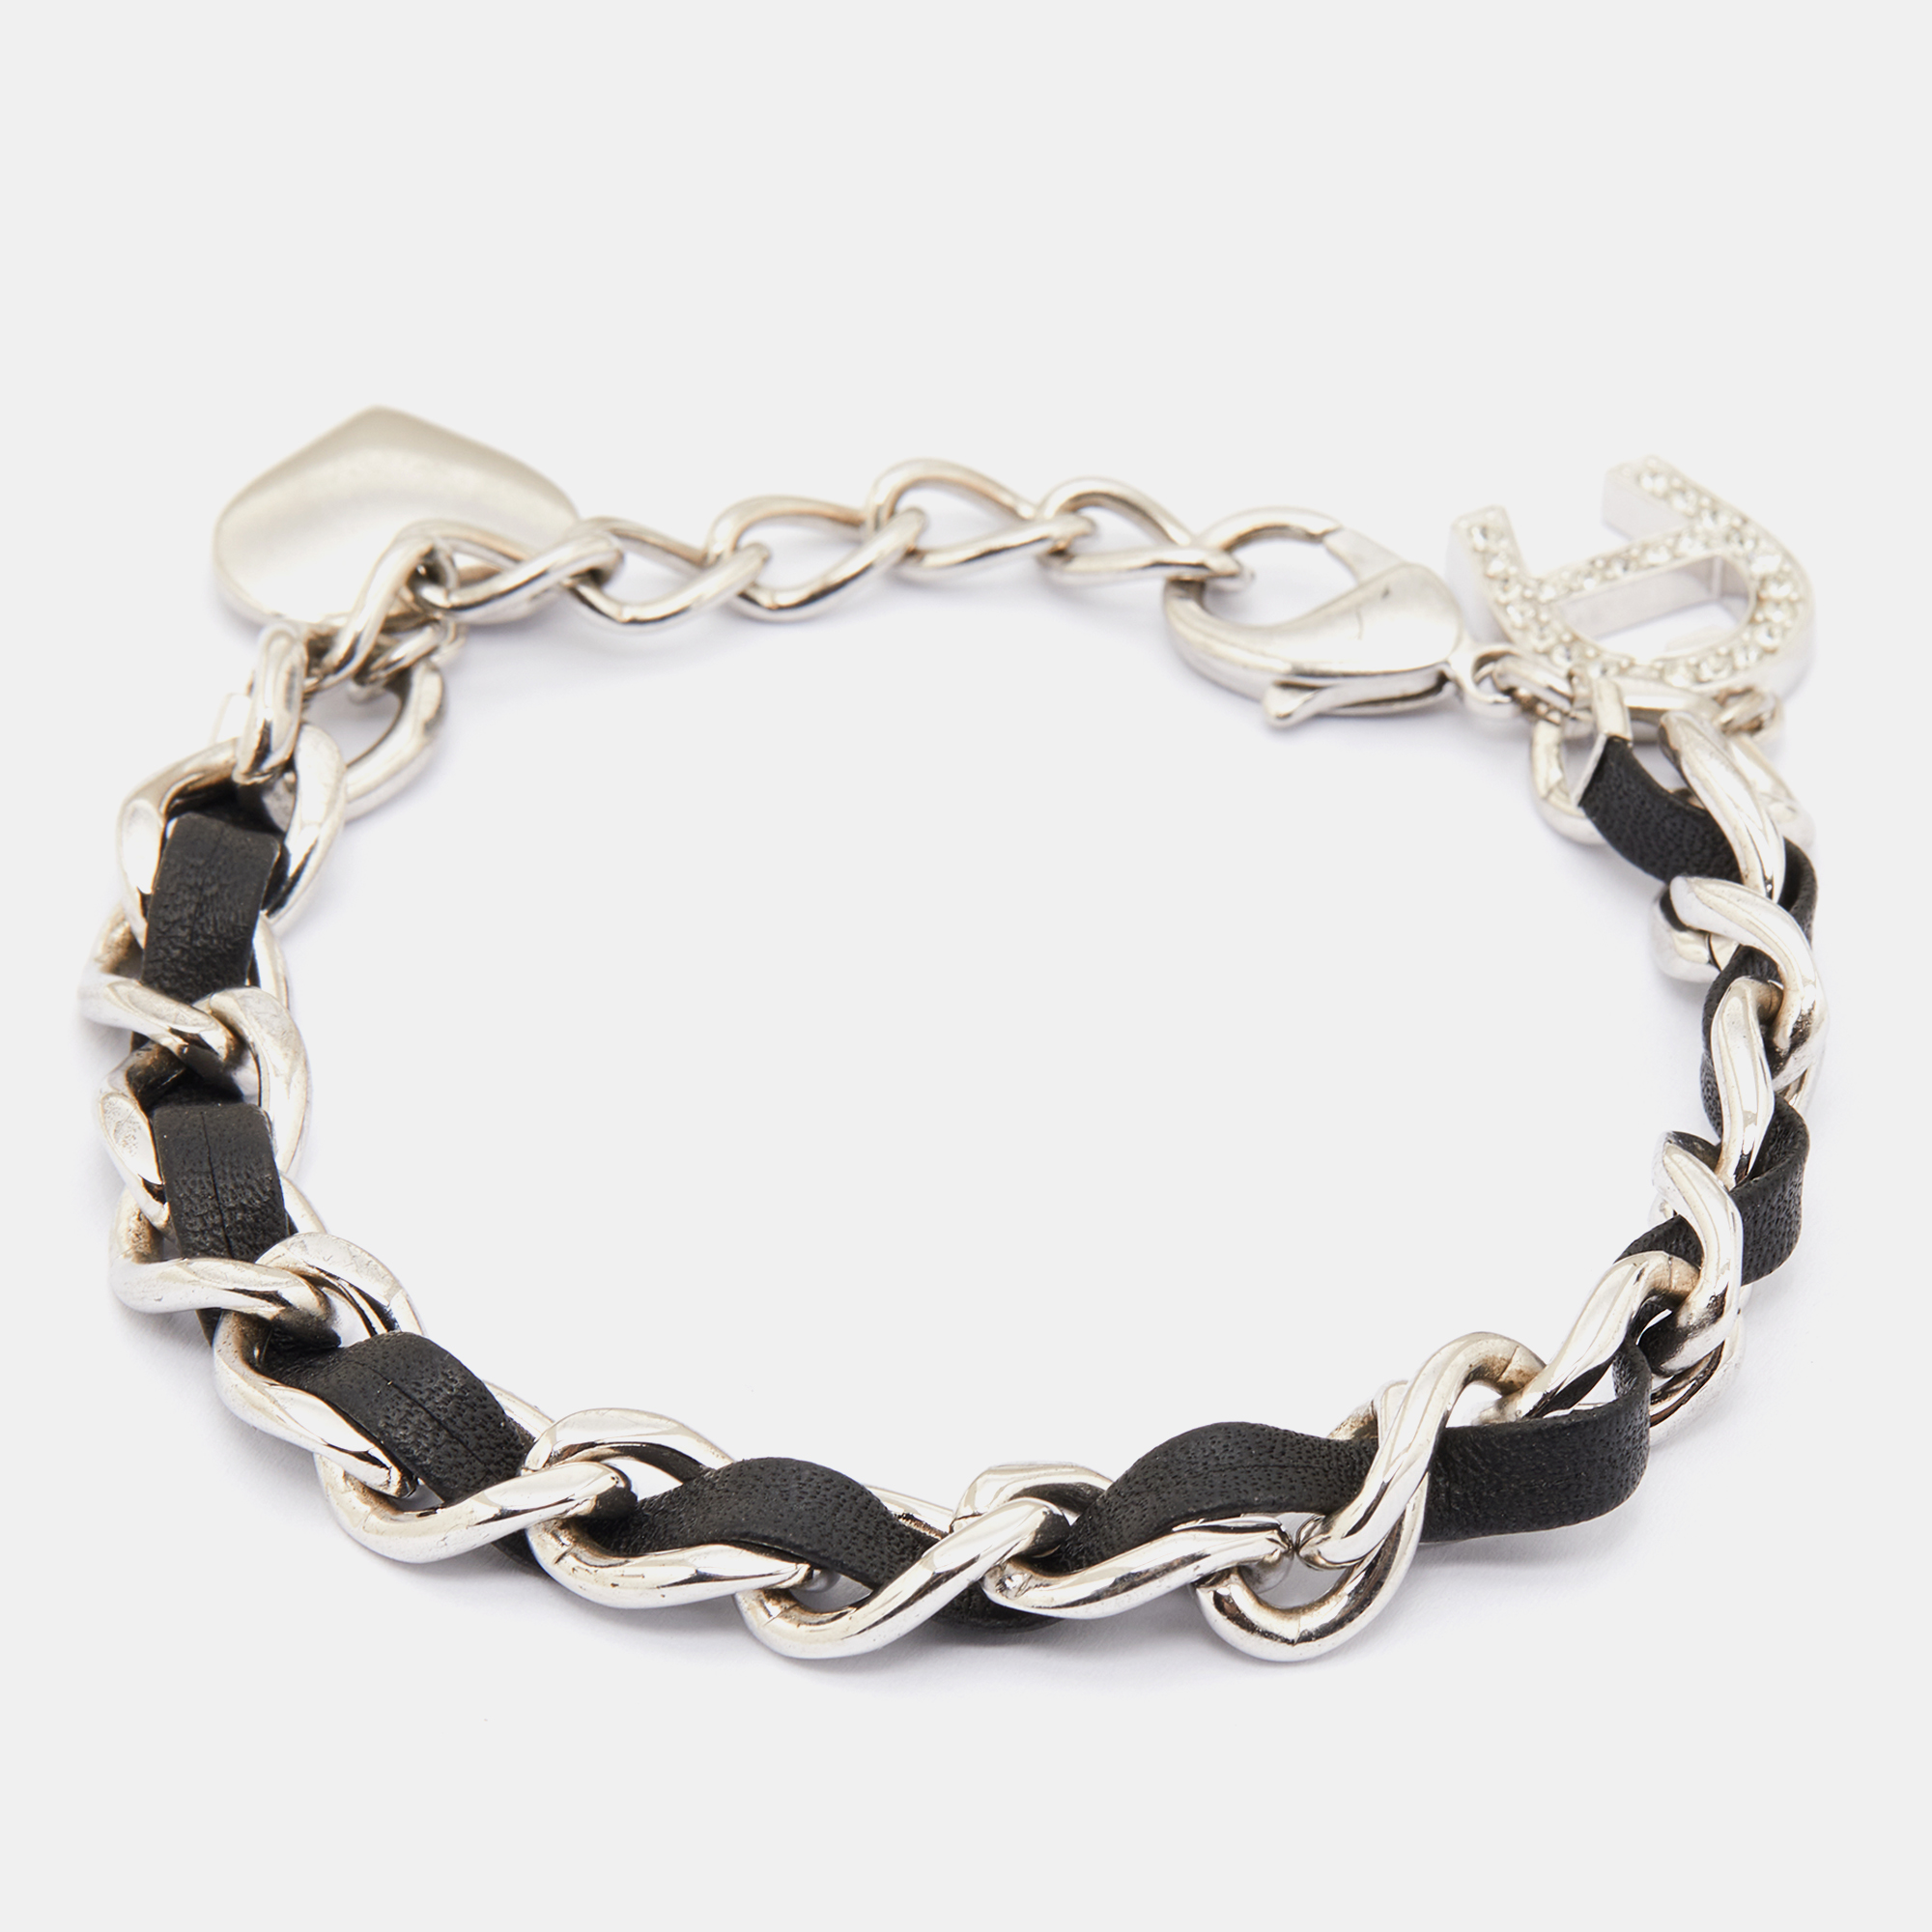 Aigner Black Leather & Silver Tone Metal Chain Bracelet